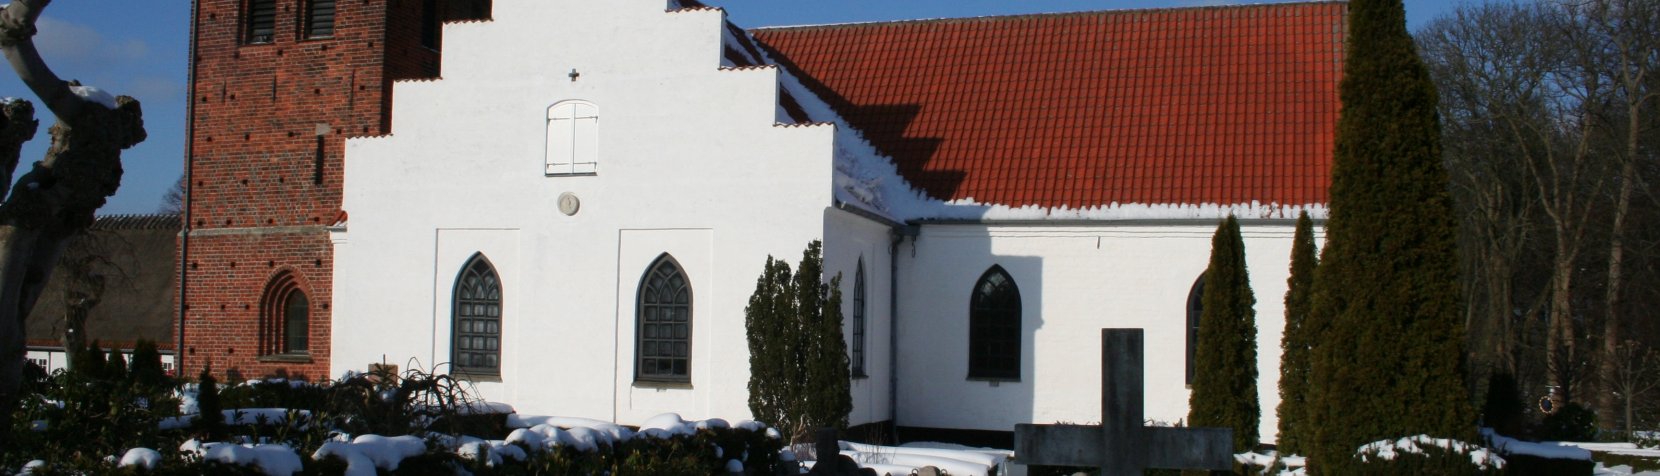 Søllerød Kirke i sne